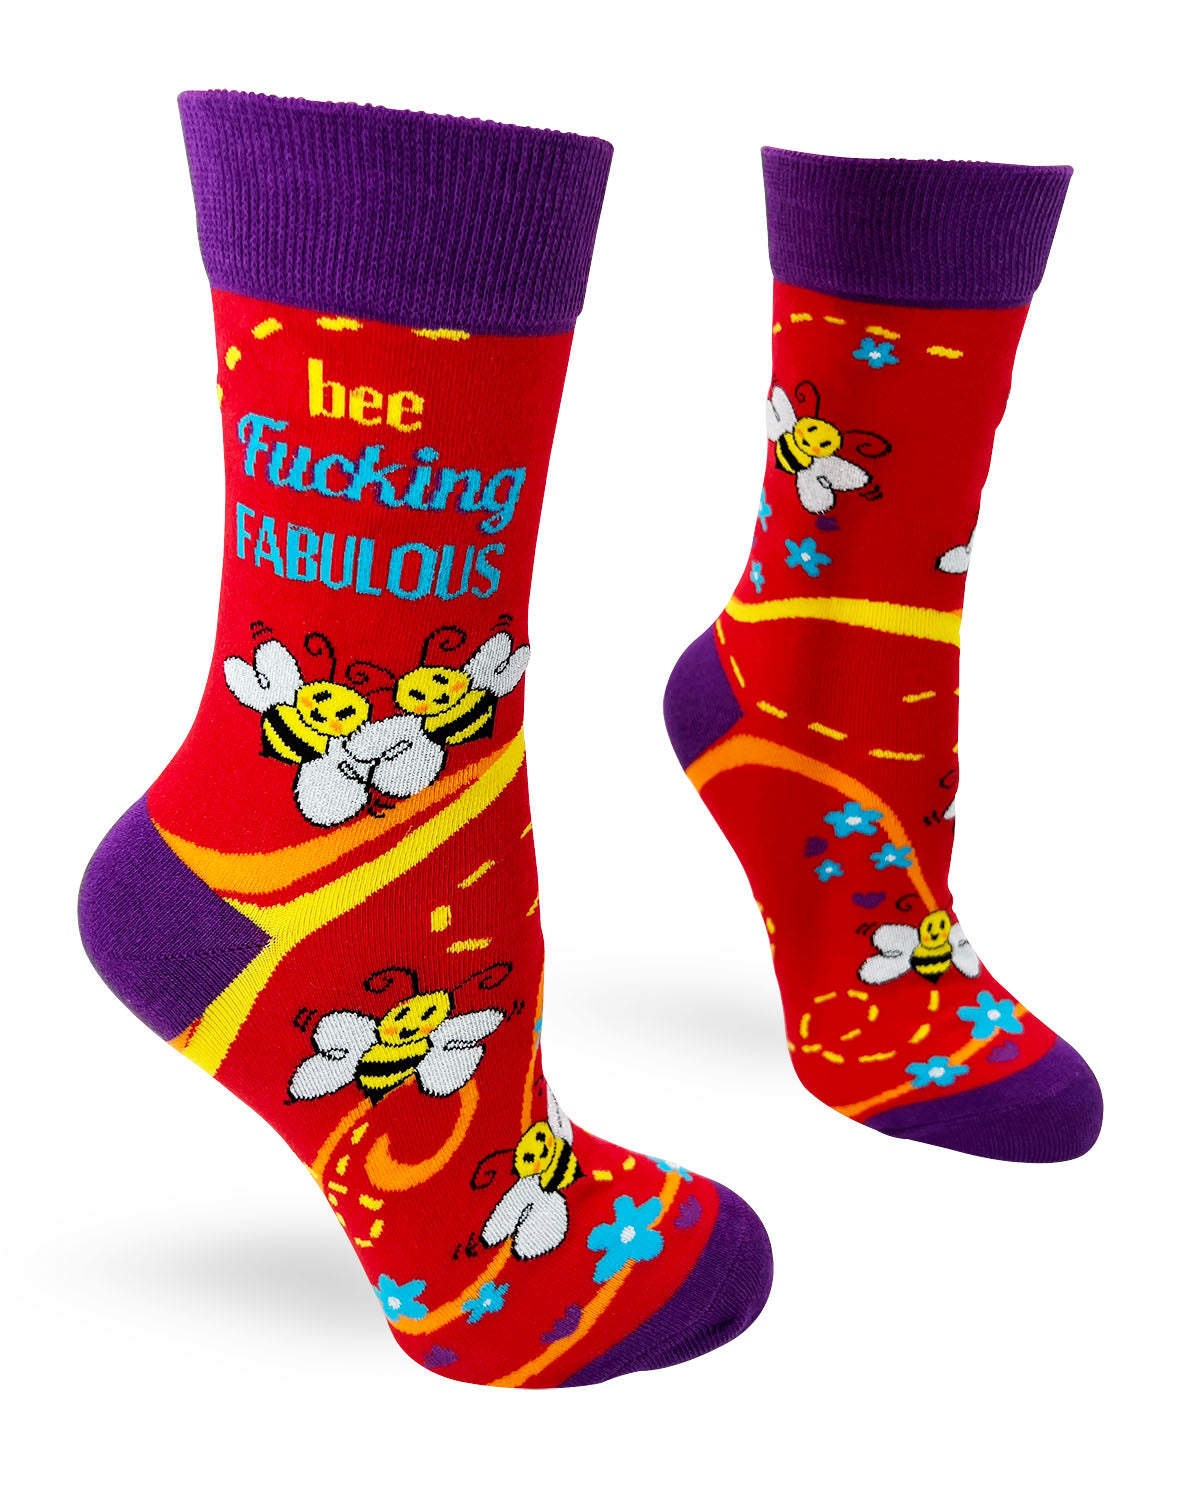 Bee Fucking Fabulous Ladies' Crew Socks